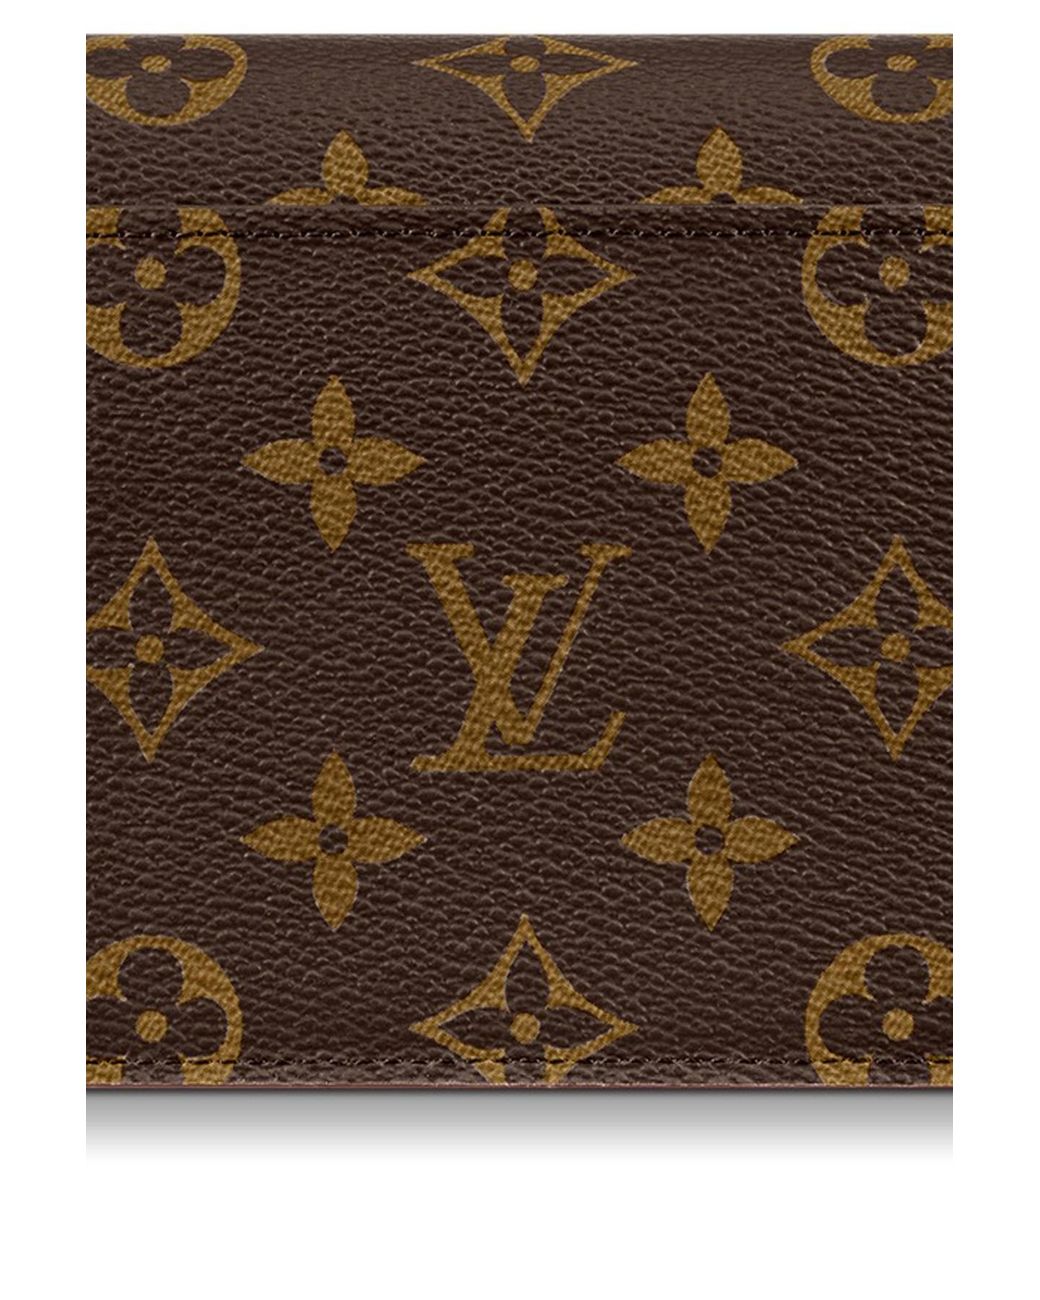 Louis Vuitton Belt & Wallet Combo » Buy online from ShopnSafe